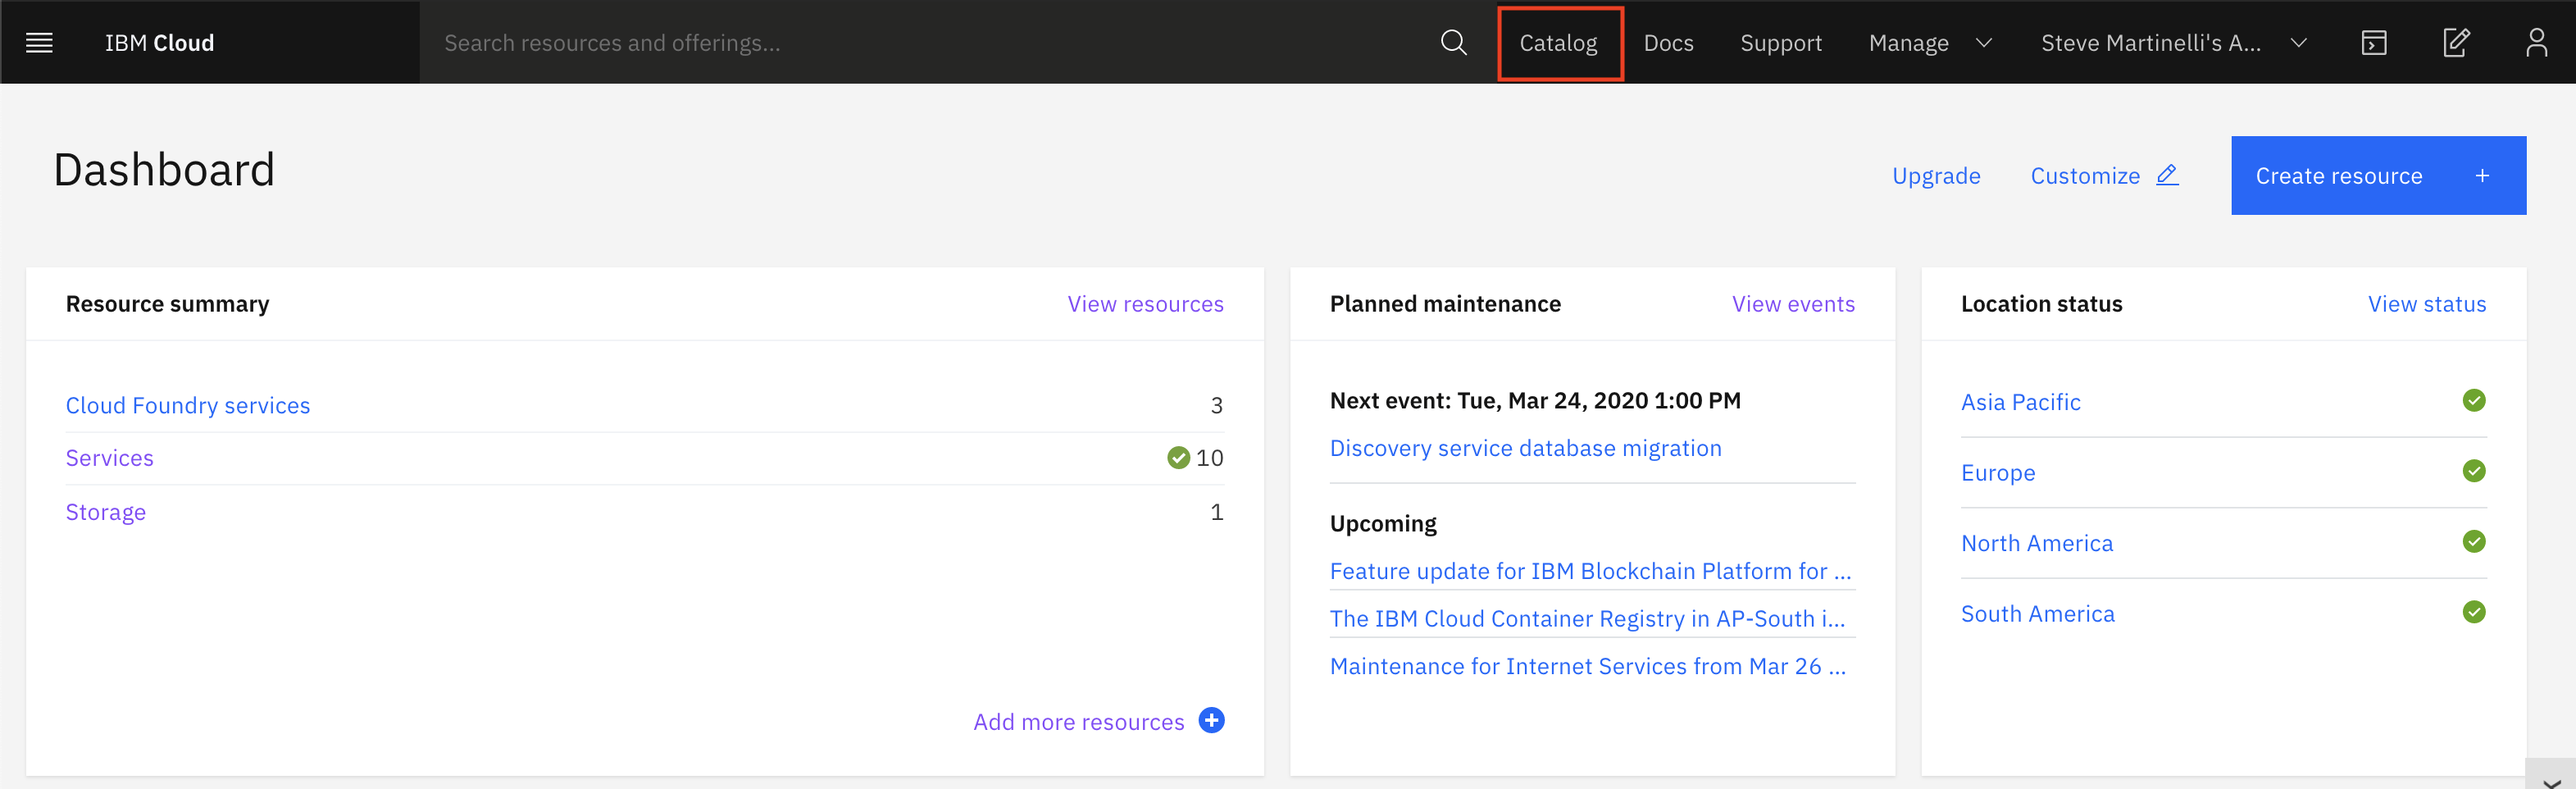 Access the IBM Cloud Catalog